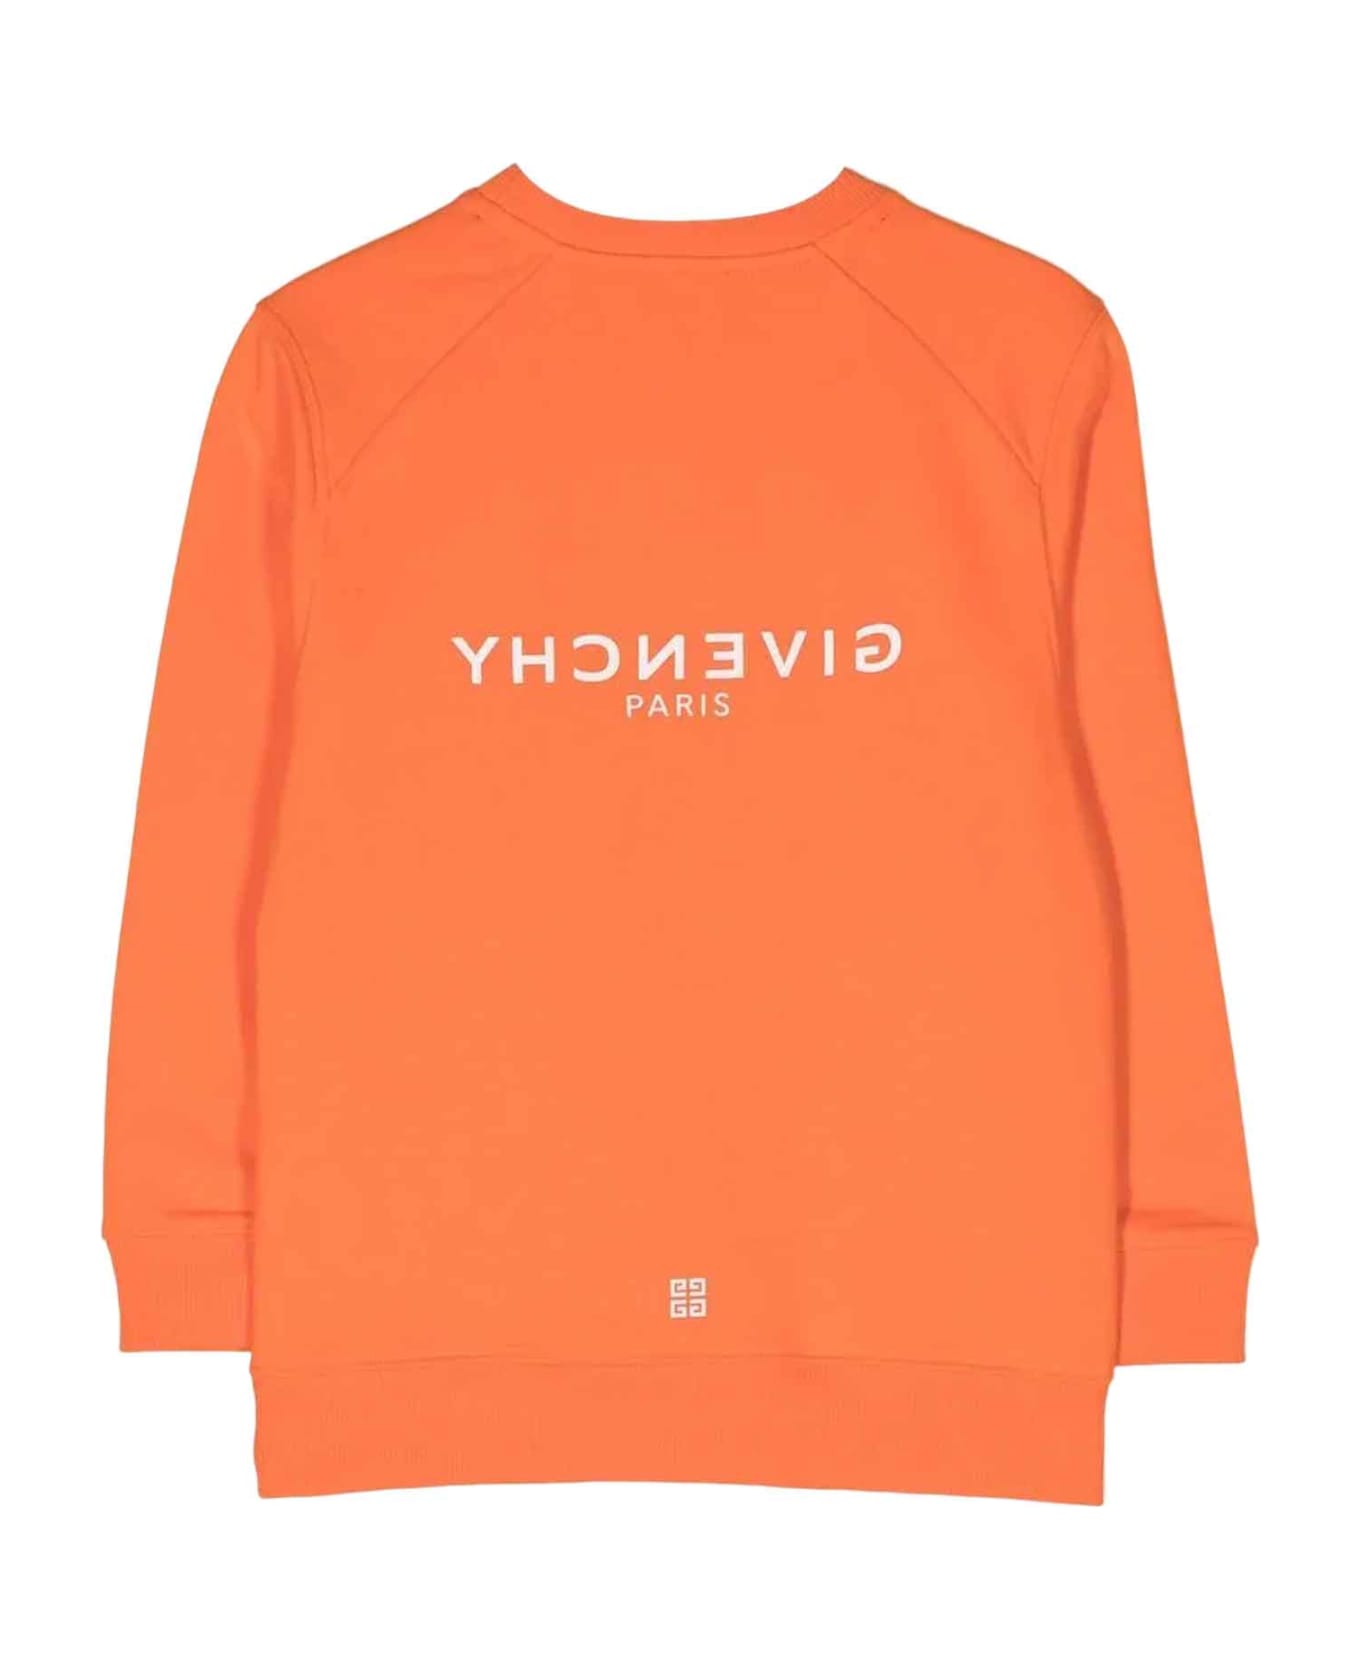 Givenchy Orange Sweatshirt Boy - Papavero